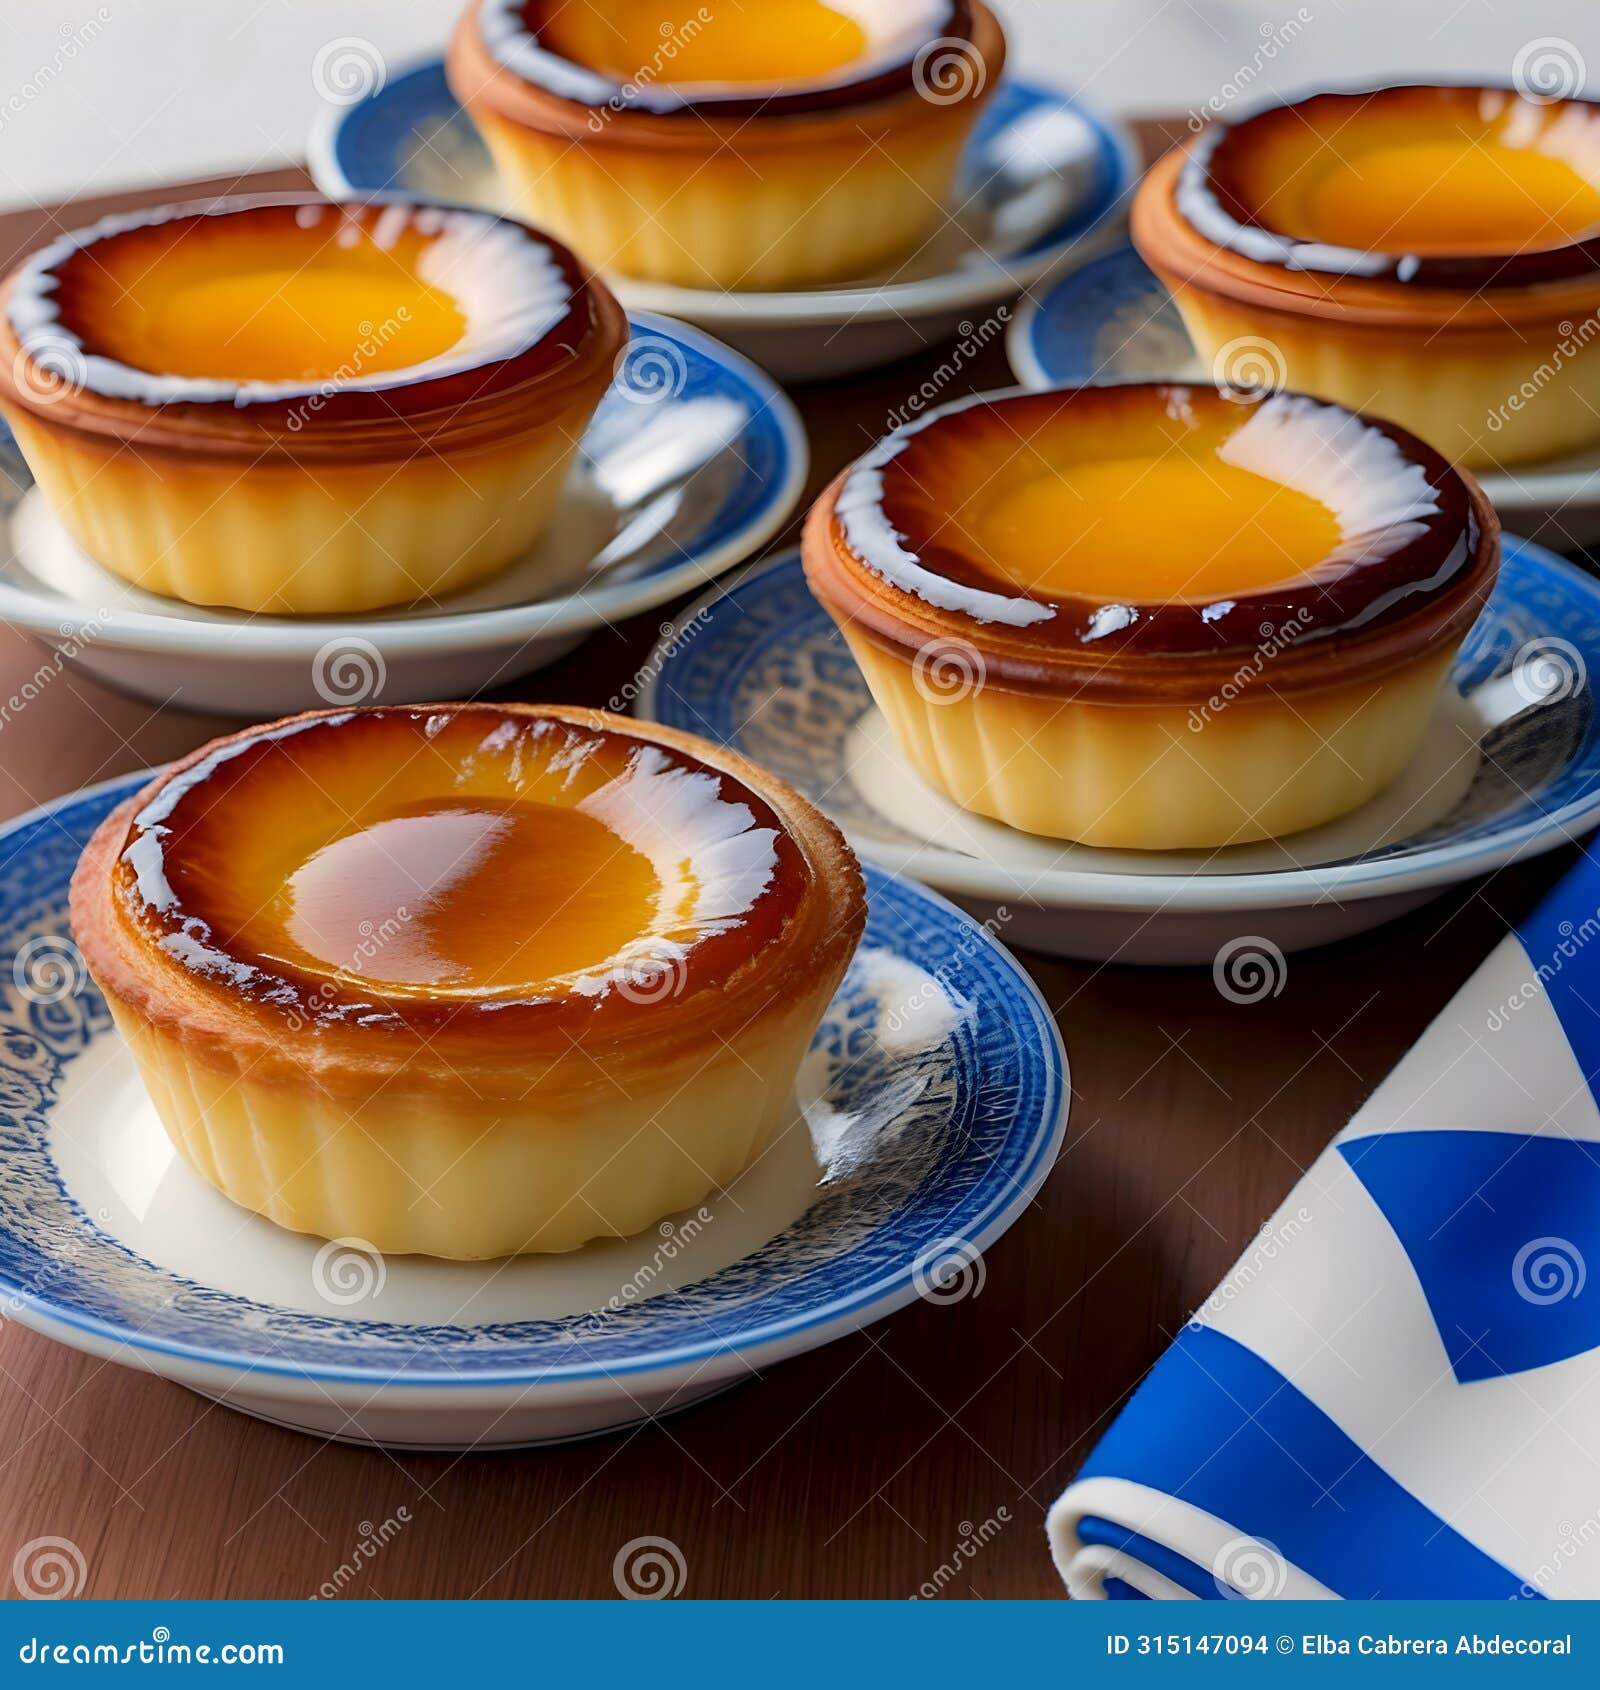 belÃÂ©m pastries or cream pastries, sweet from portugal